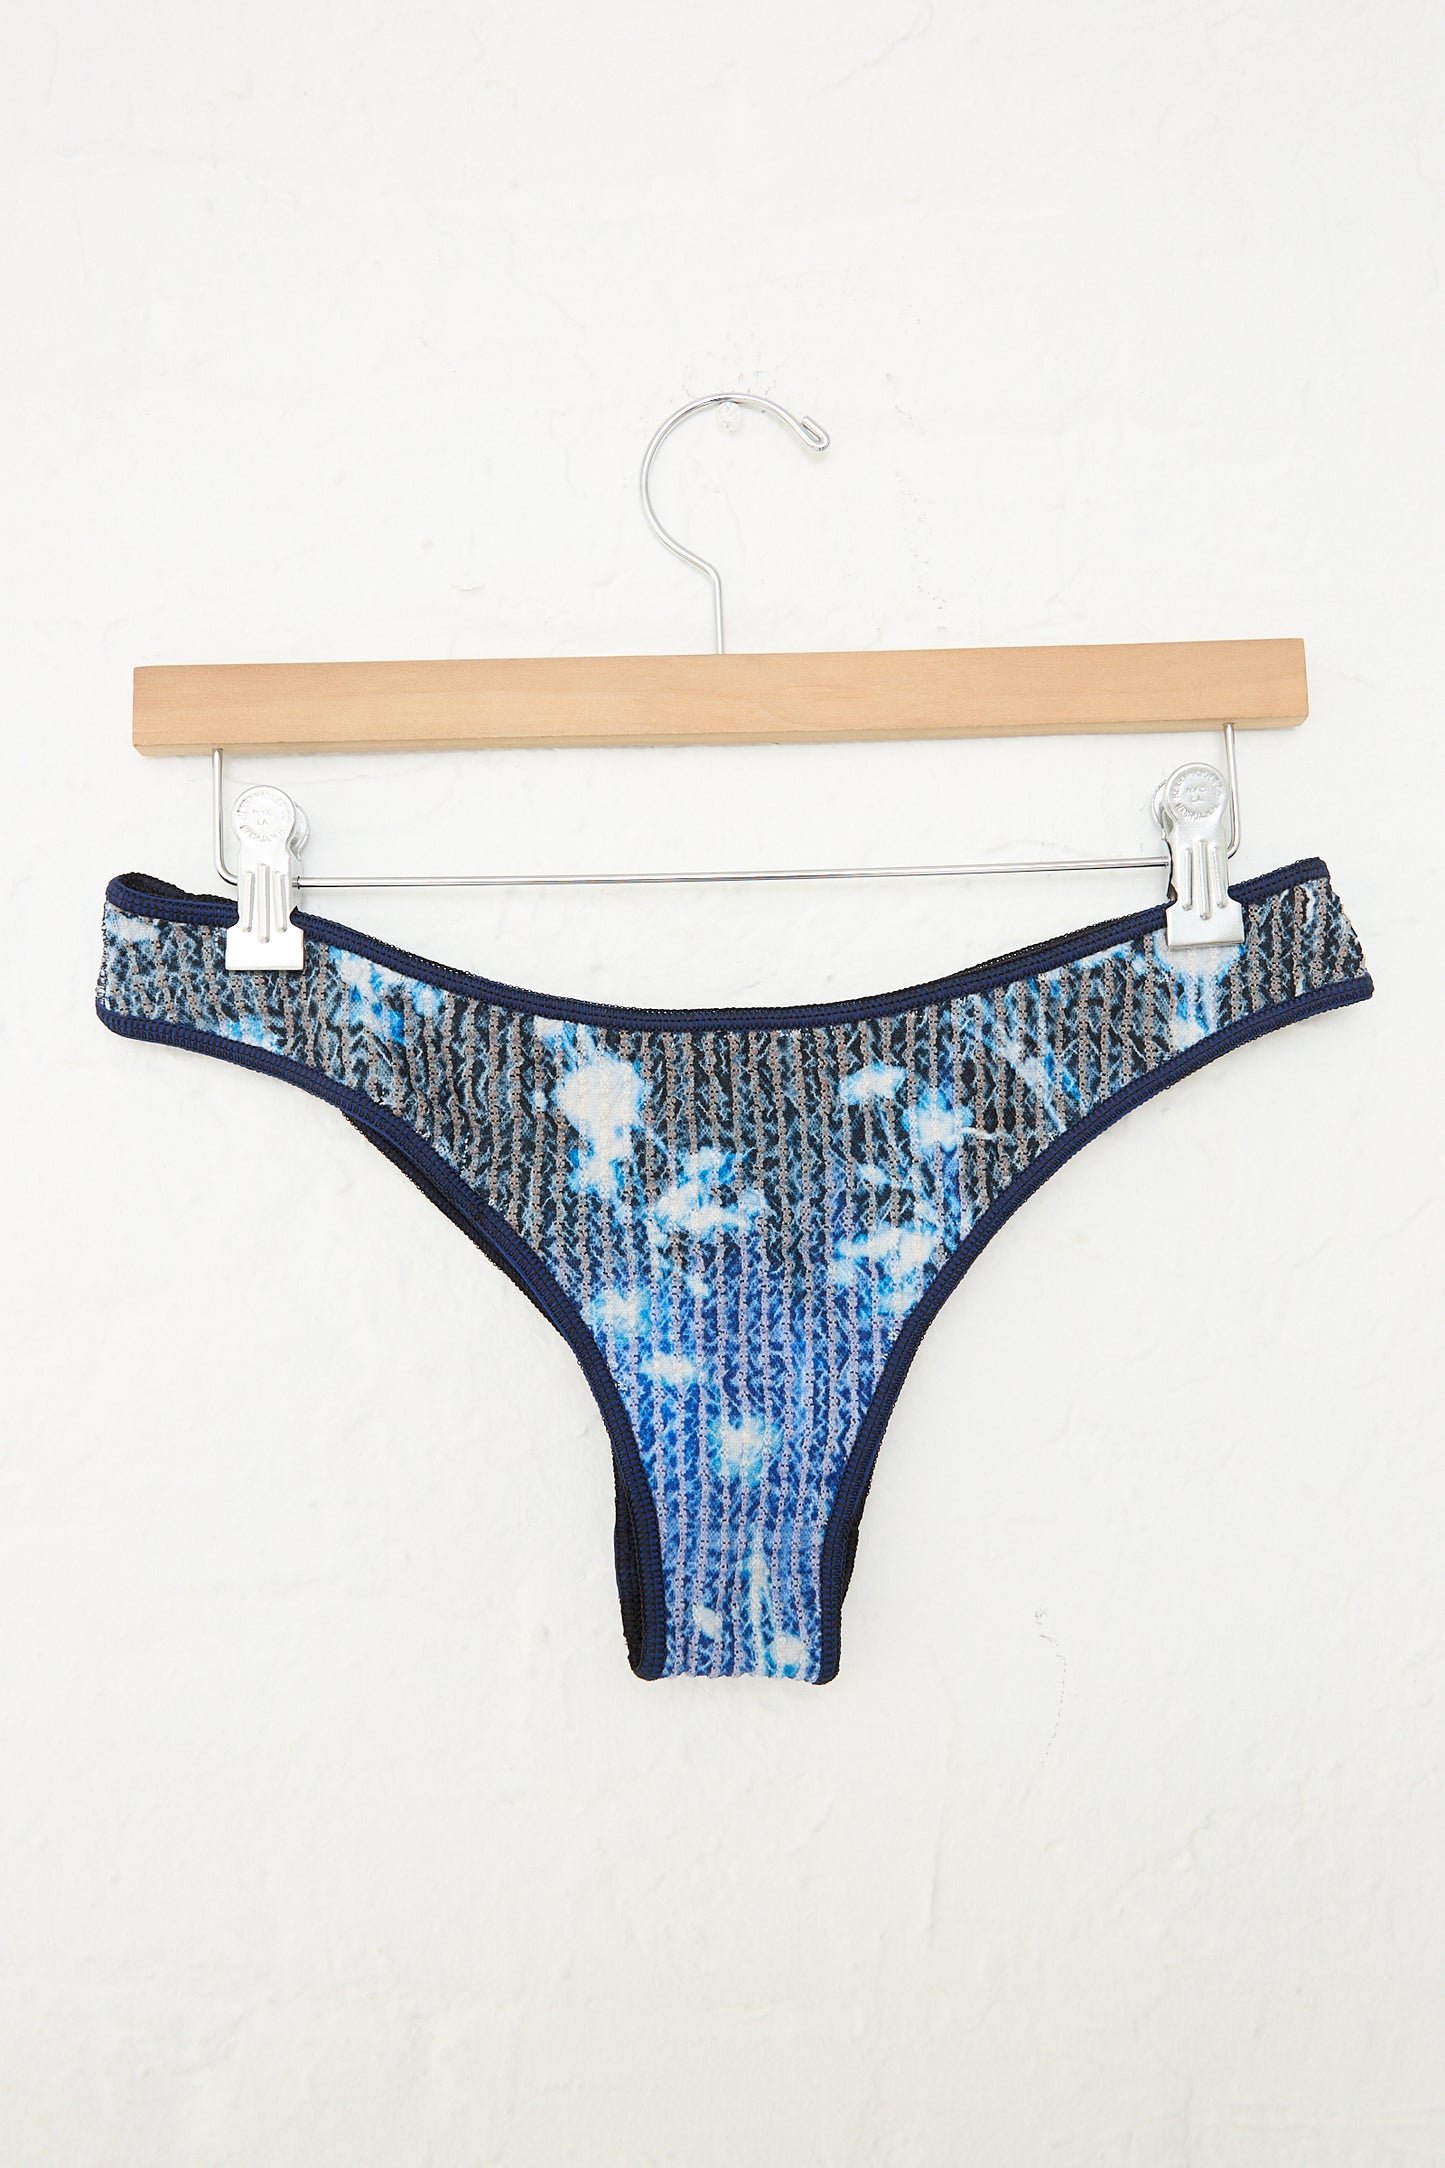 A Luna Del Pinal Jasmine Screen Printed Stretch Weave Crop Top Bikini in Midnight Blue hanging on a hanger.